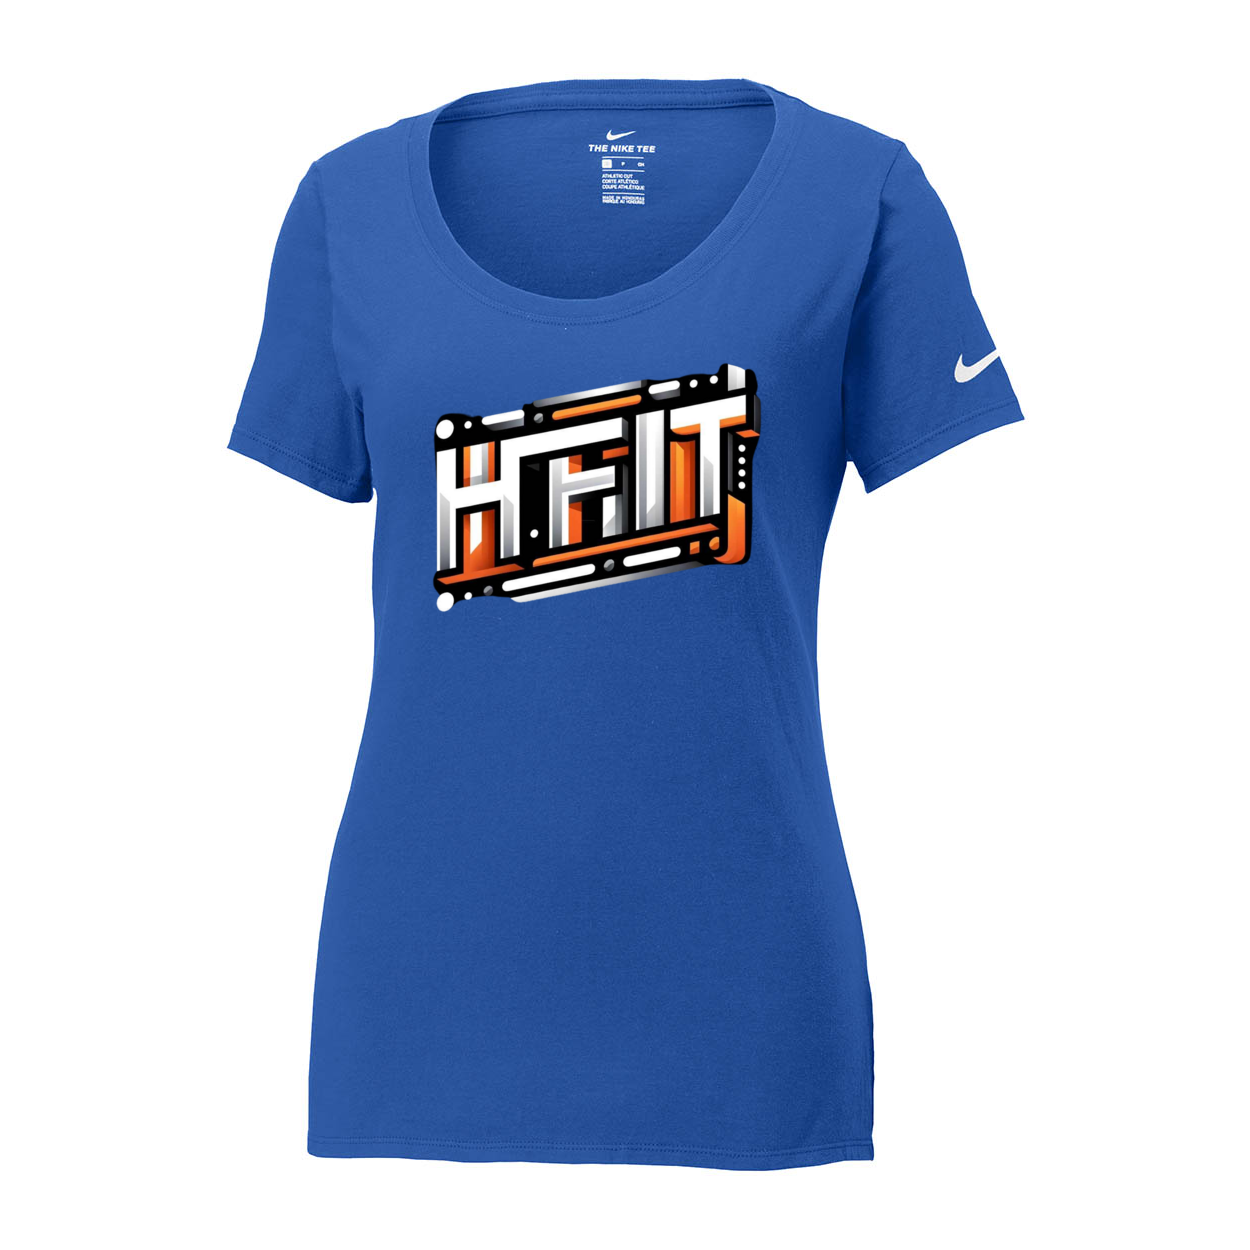 HFIT Nike Ladies Core Cotton Scoop Neck Tee Top